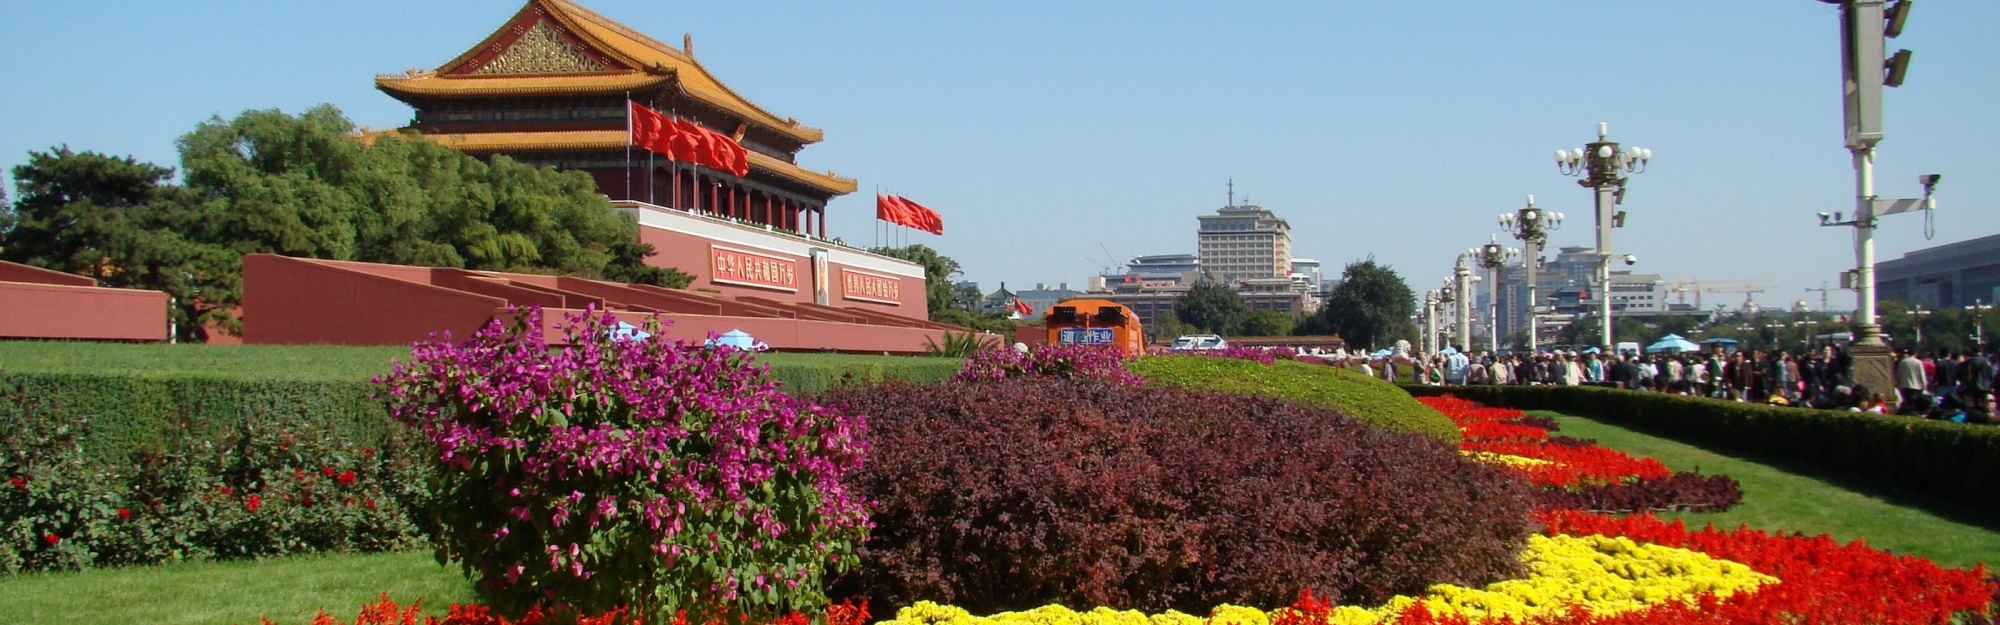 City Landscape Tiananmen Beijing China